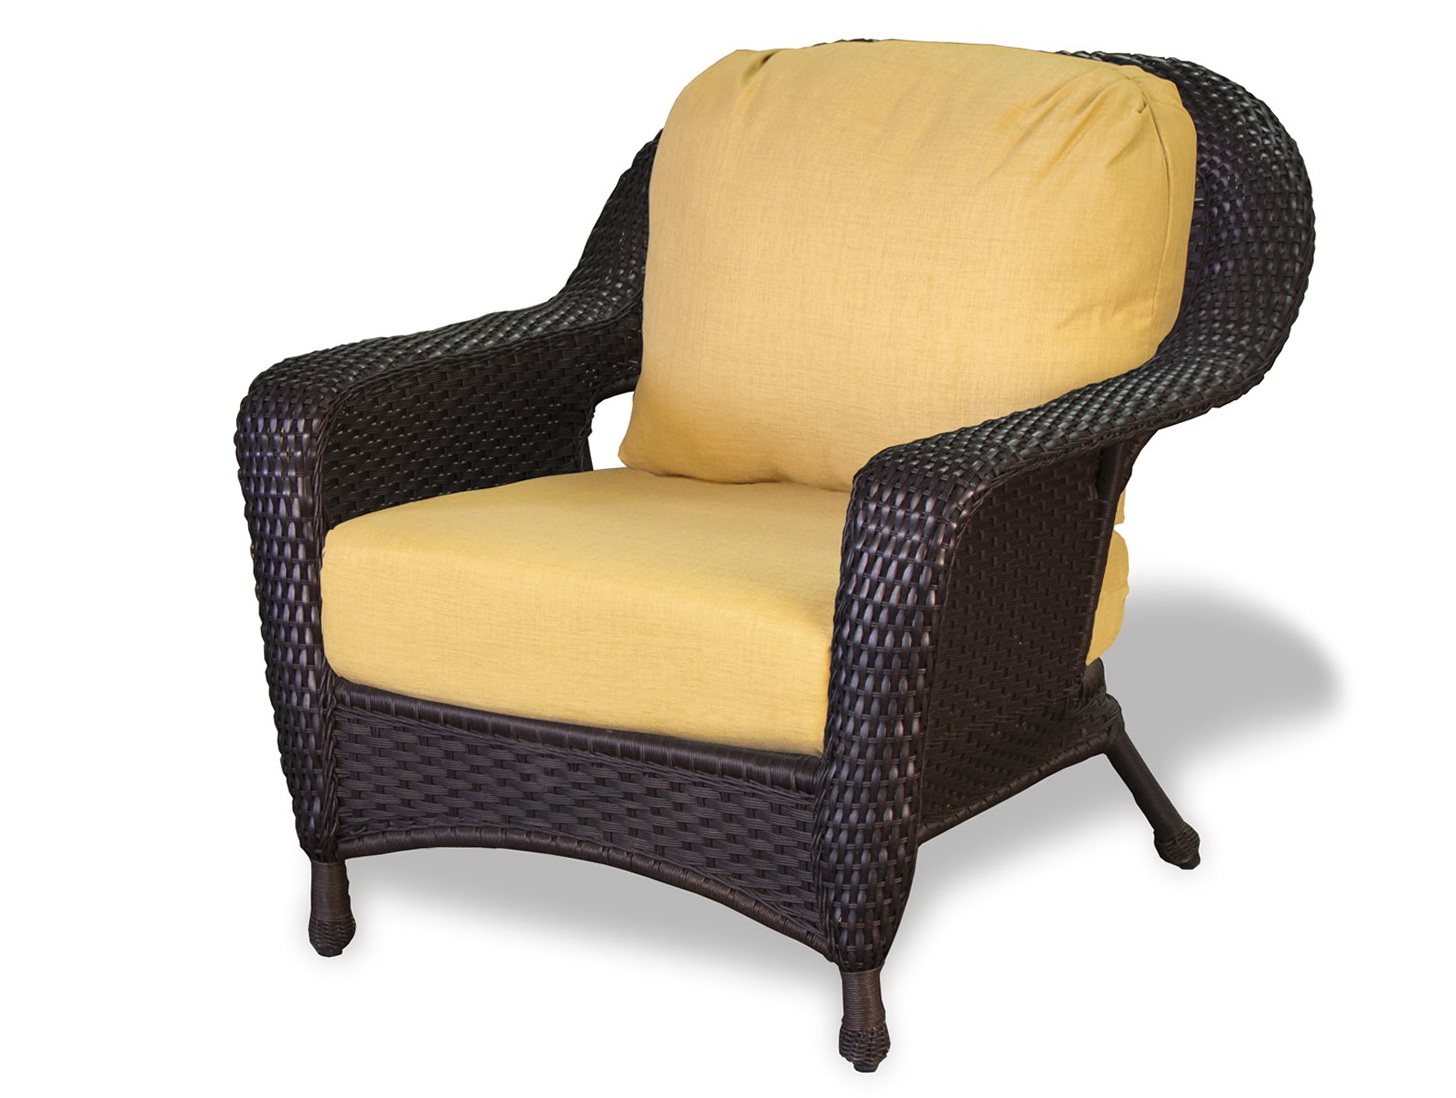 Wicker Chair Cushions Outdoor Home Design Ideas